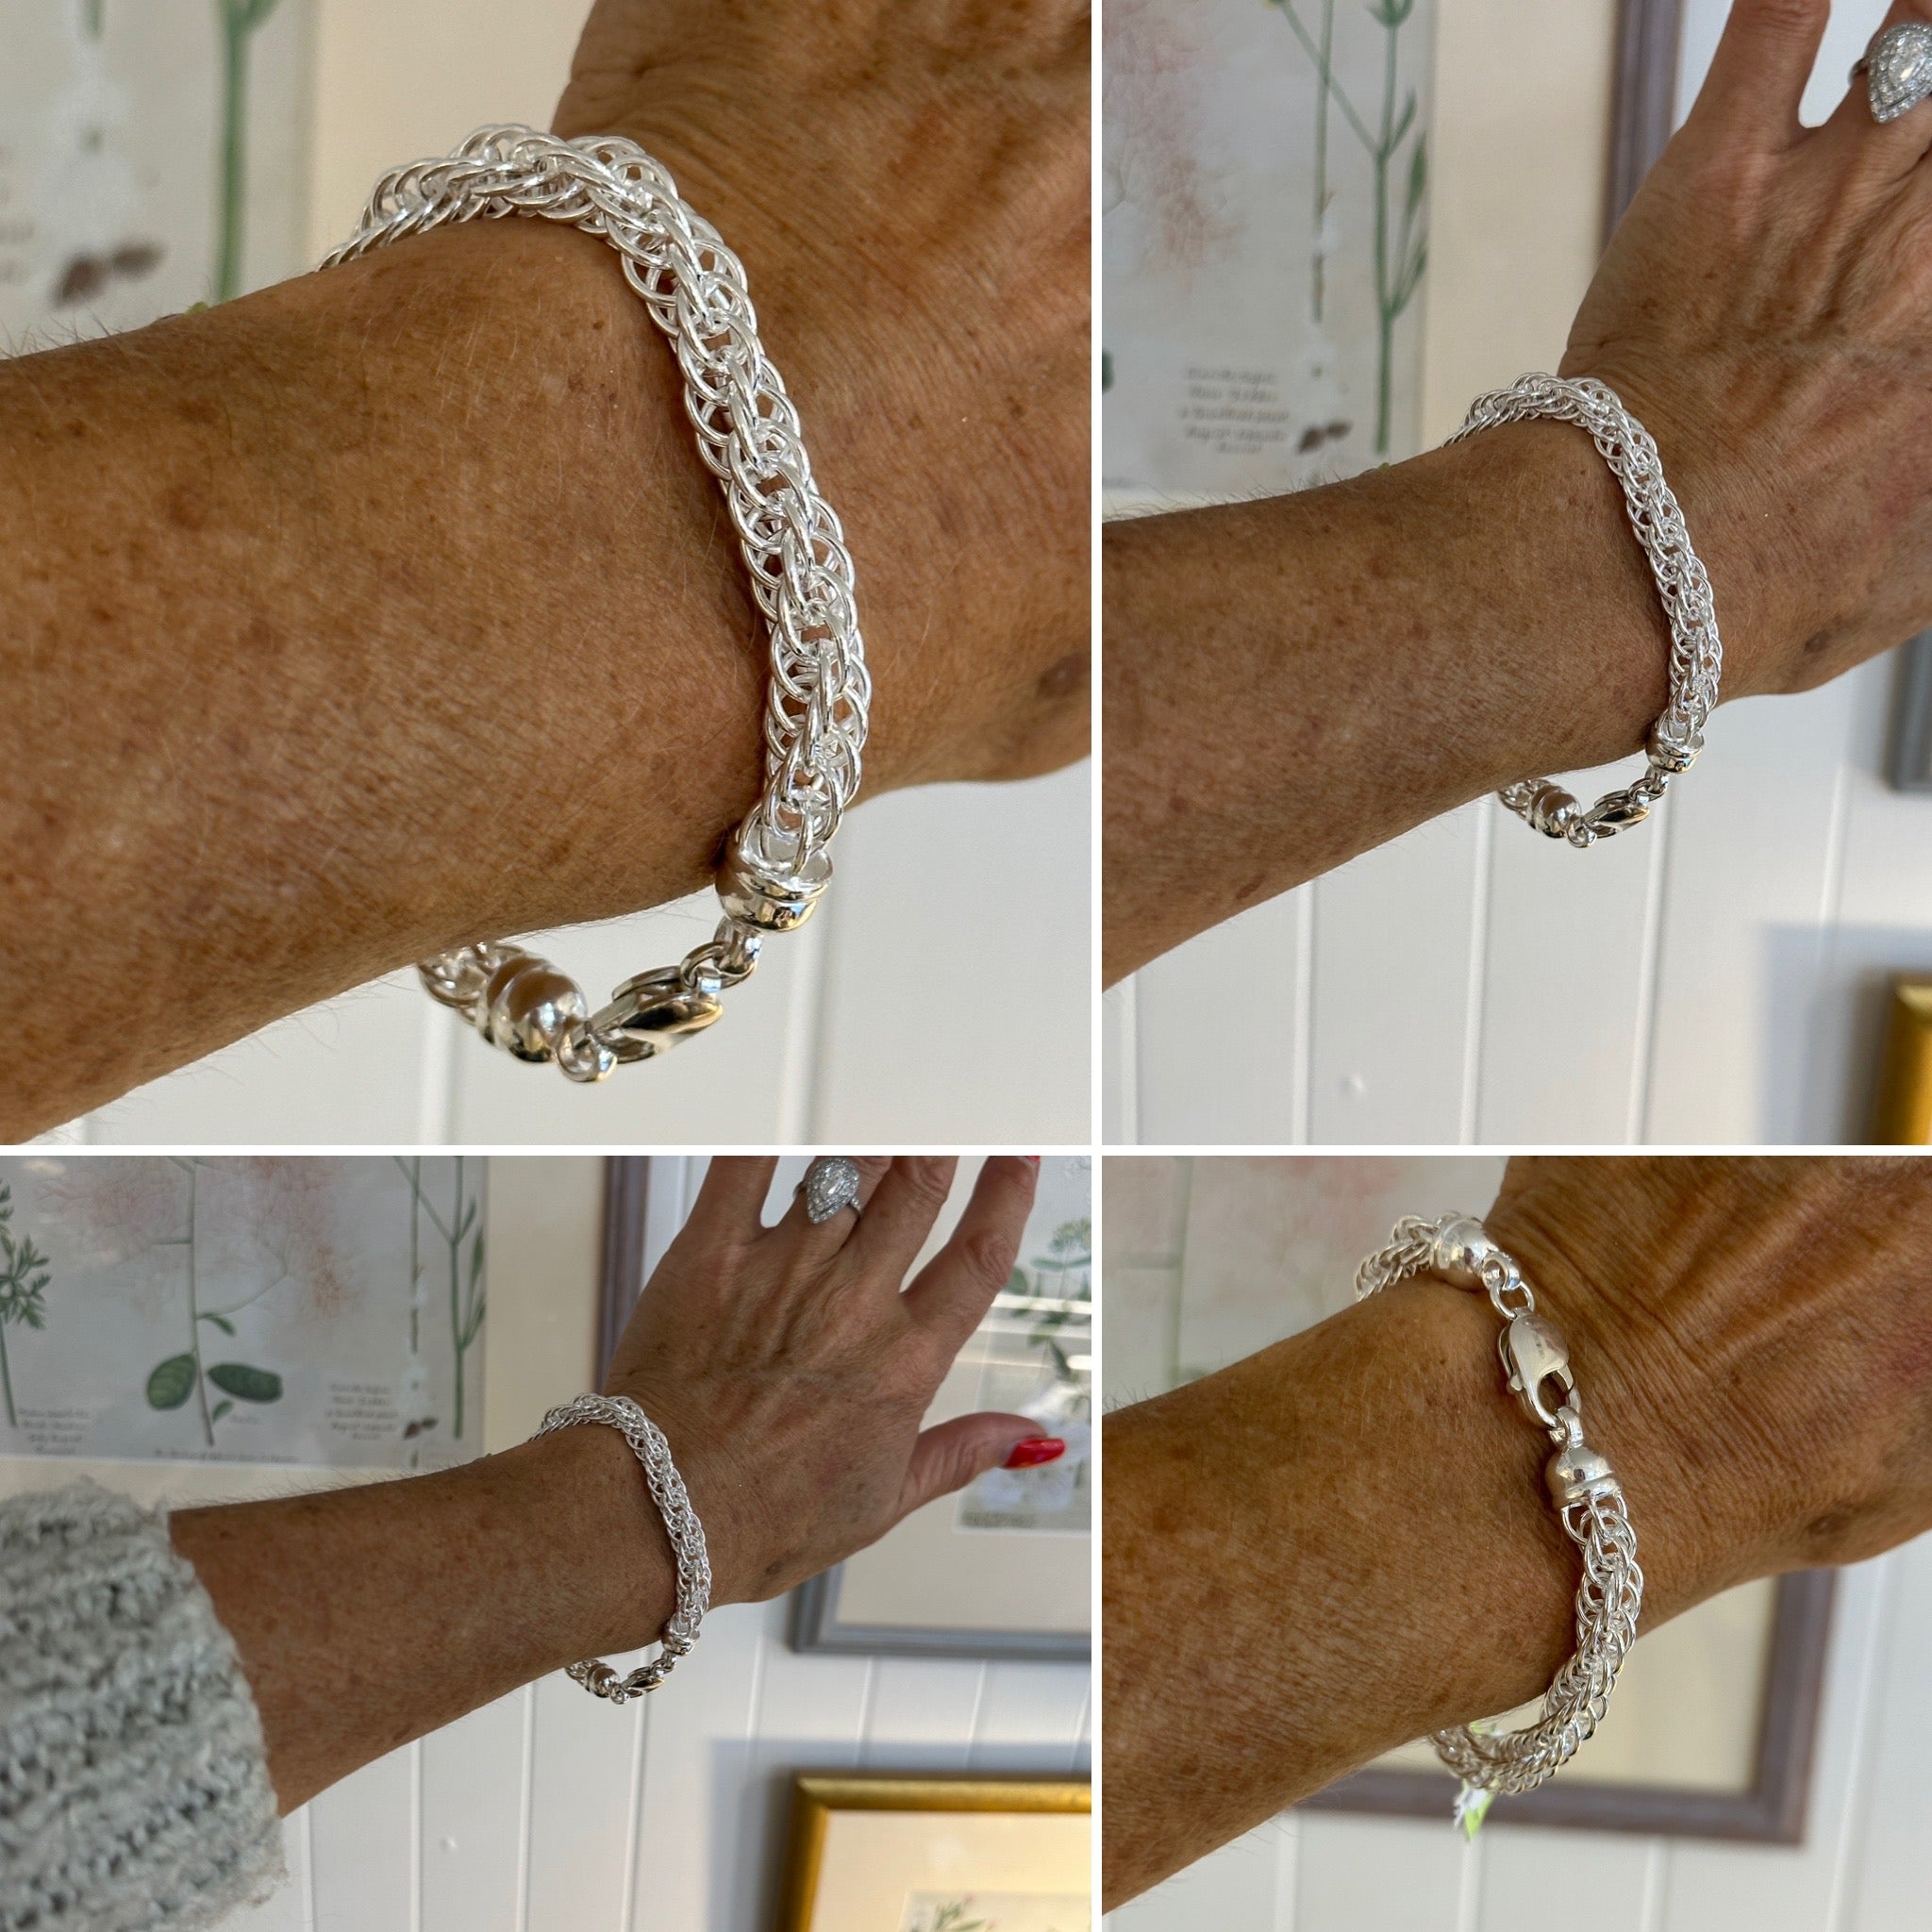 Eithne: a silver bracelet